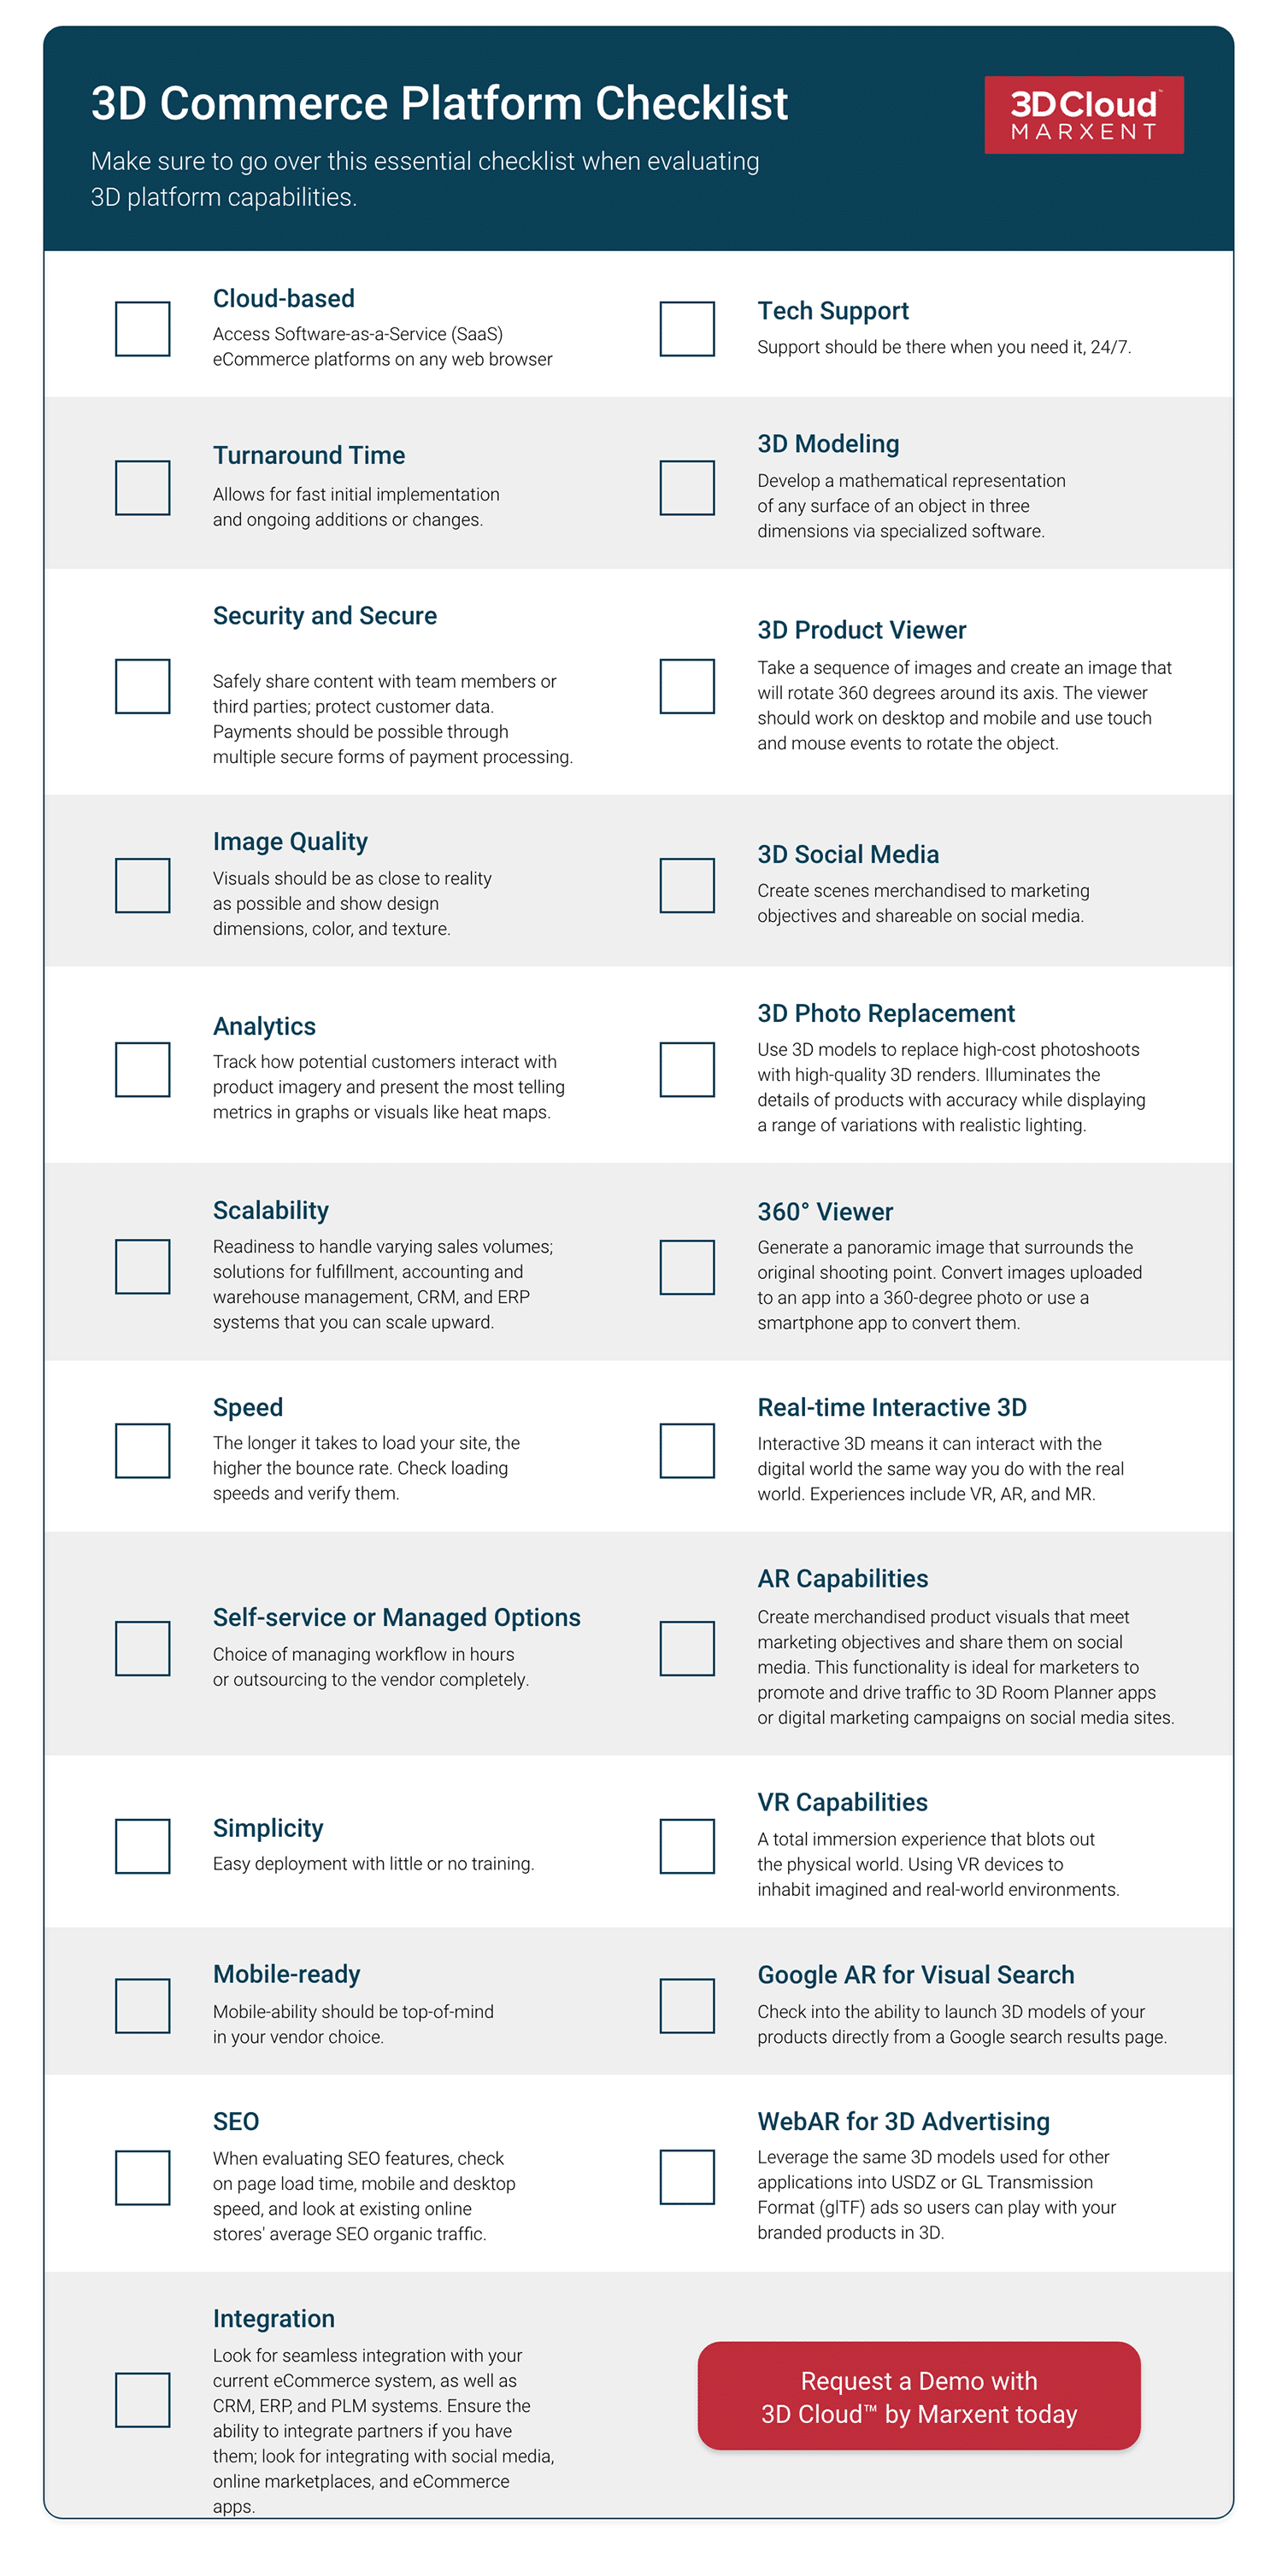 3D Commerce Platform Checklist